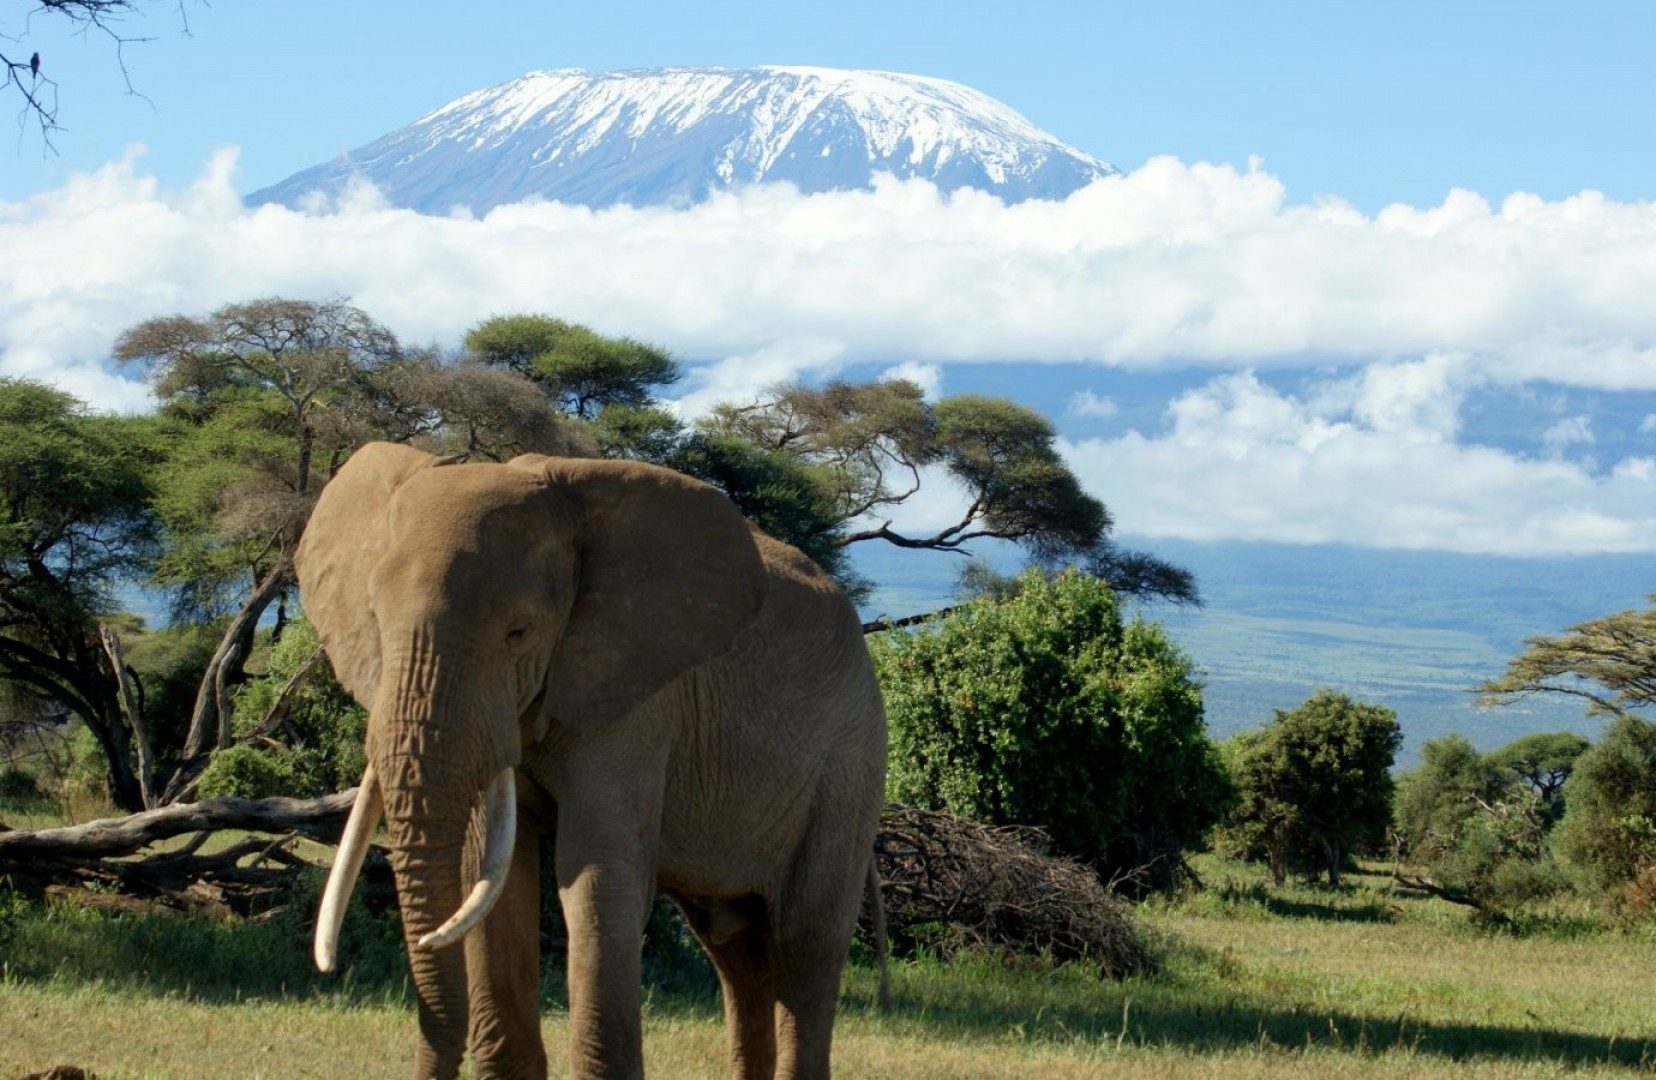 Mount-Kilimanjaro-8